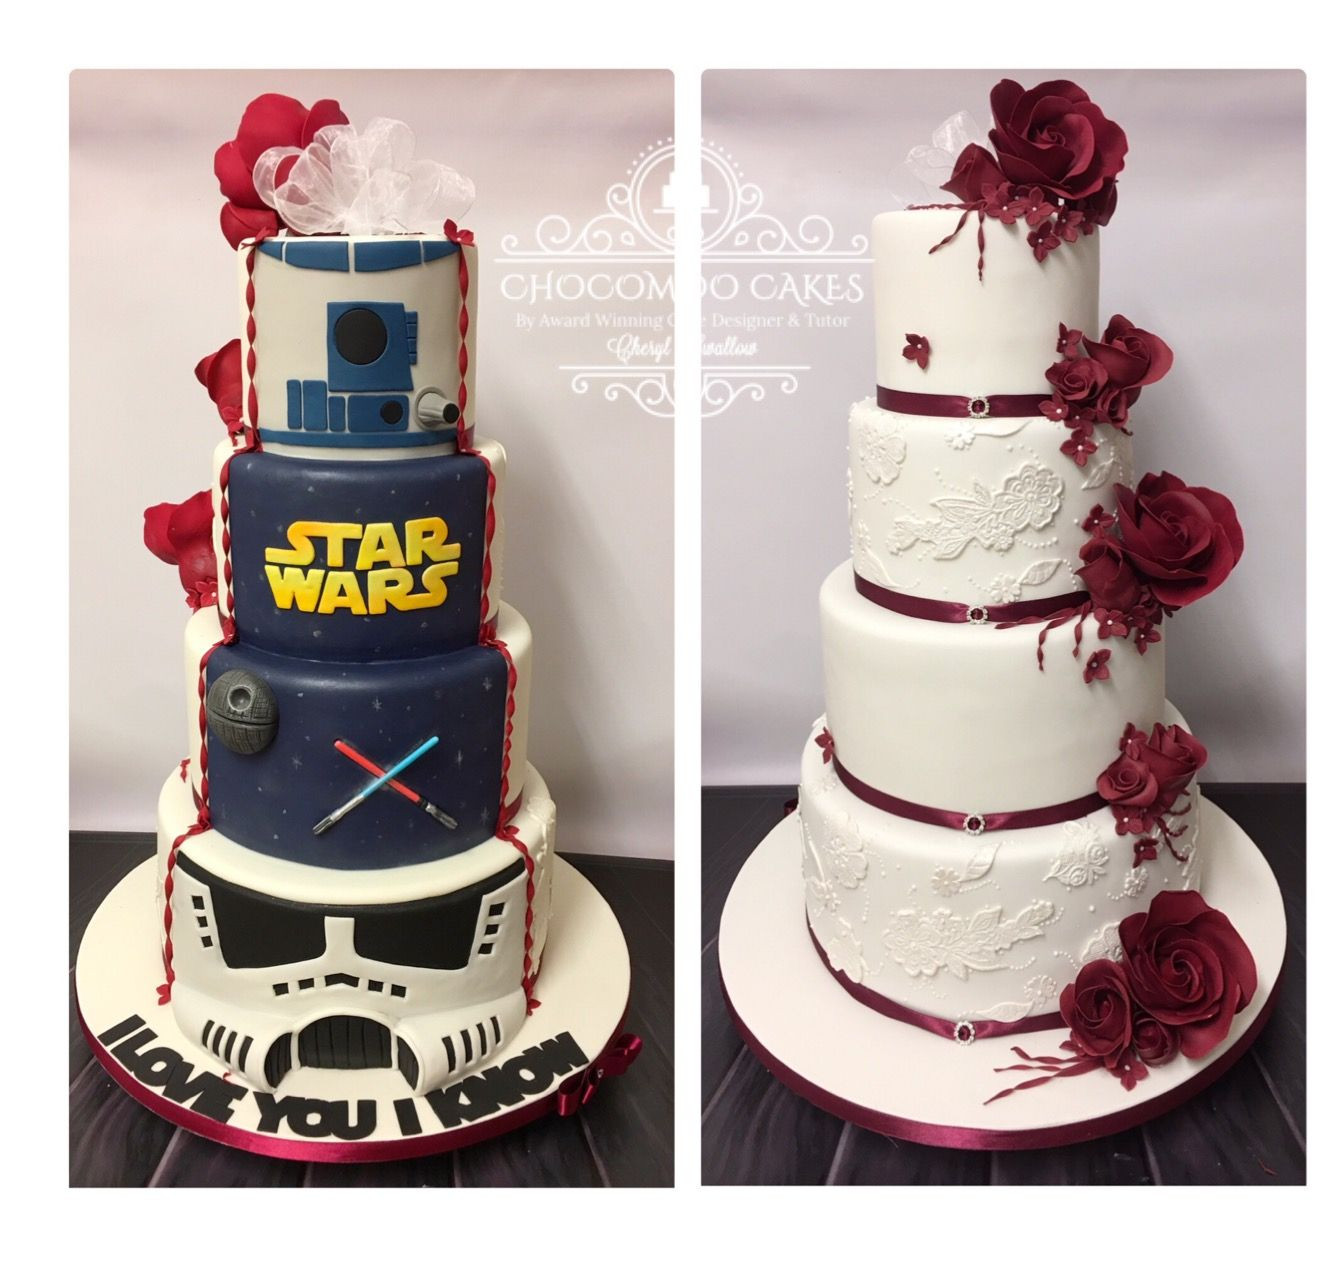 Star Wars Wedding Cake
 Half wedding cake half Star Wars